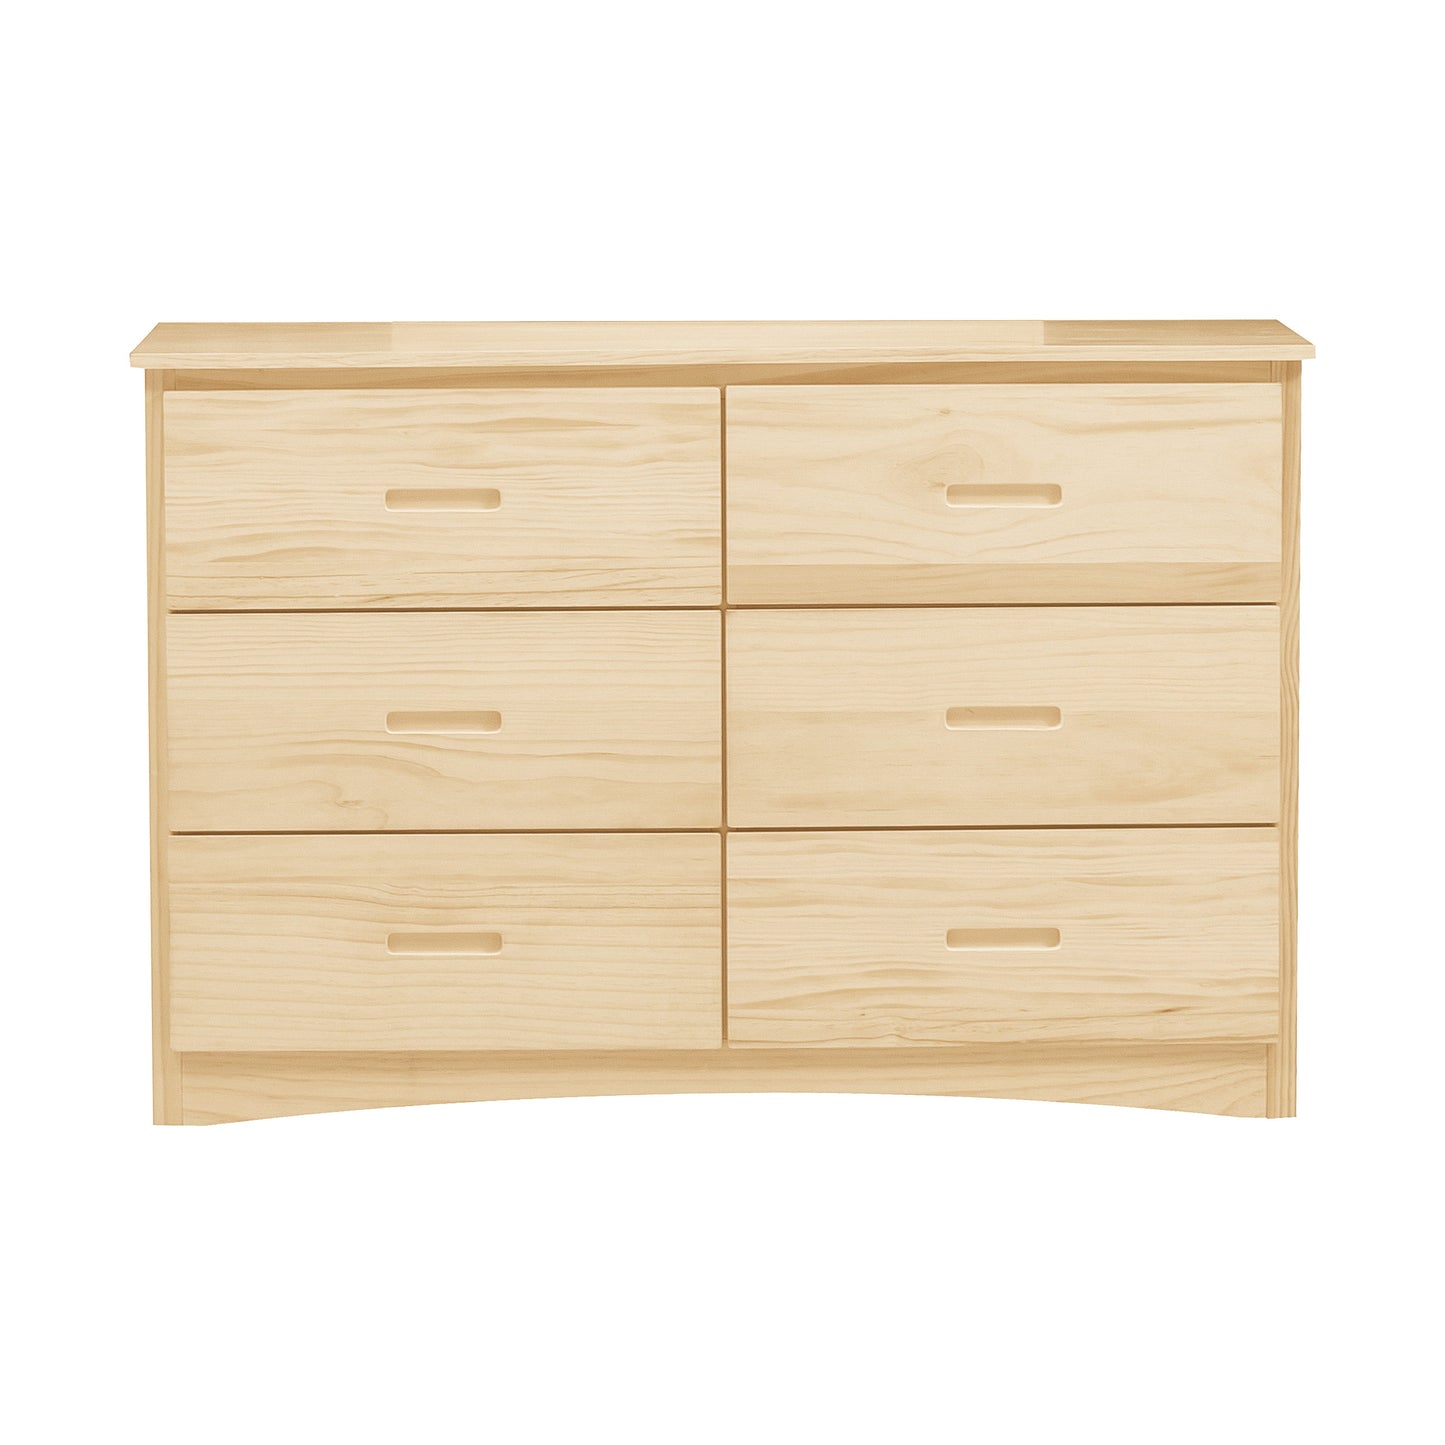 Bartly Pine Dresser